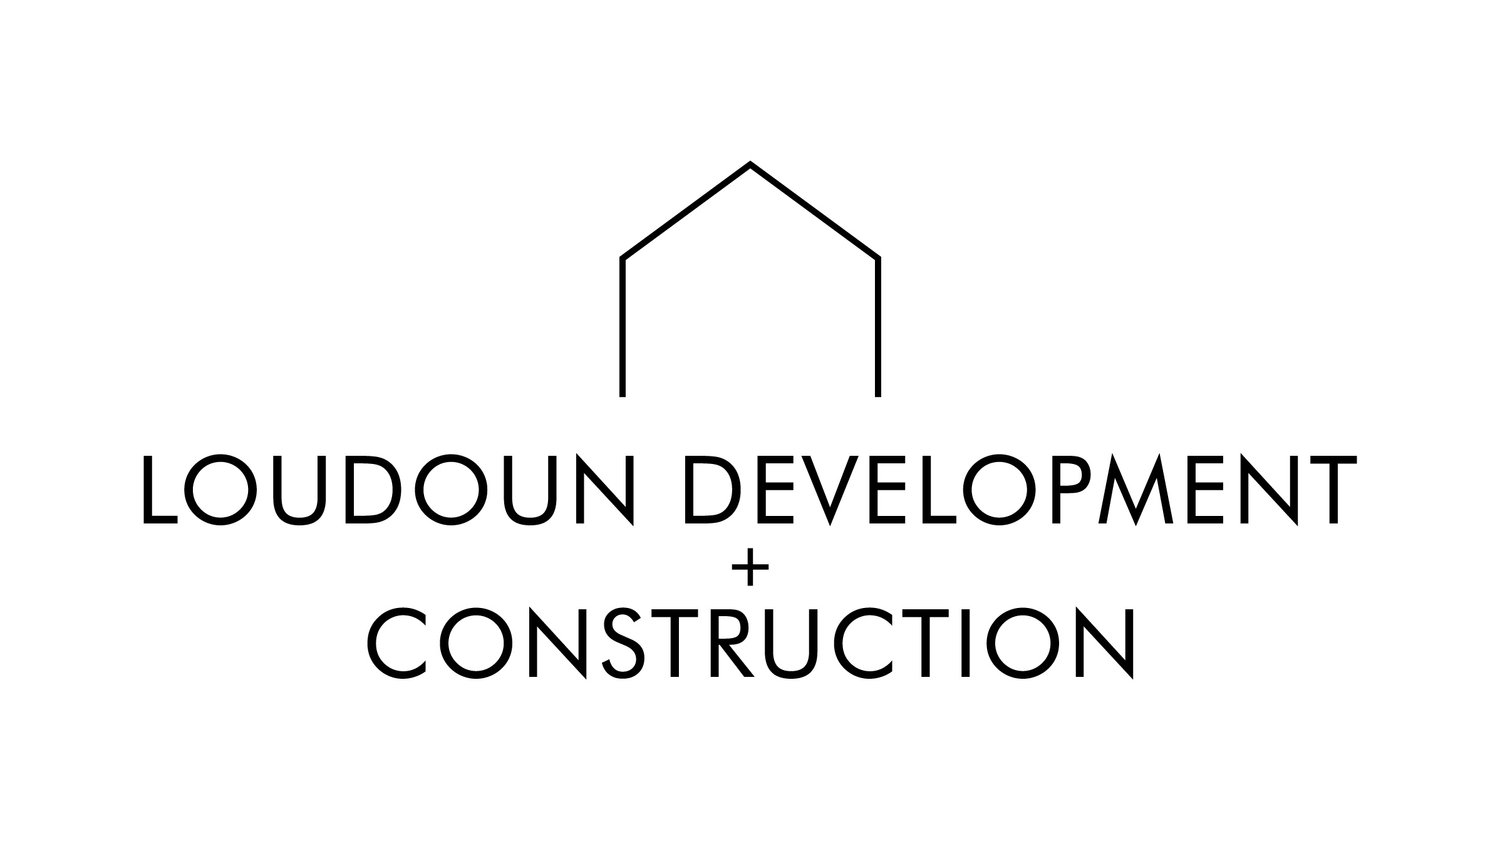 LOUDOUN DEVELOPMENT + CONSTRUCTION